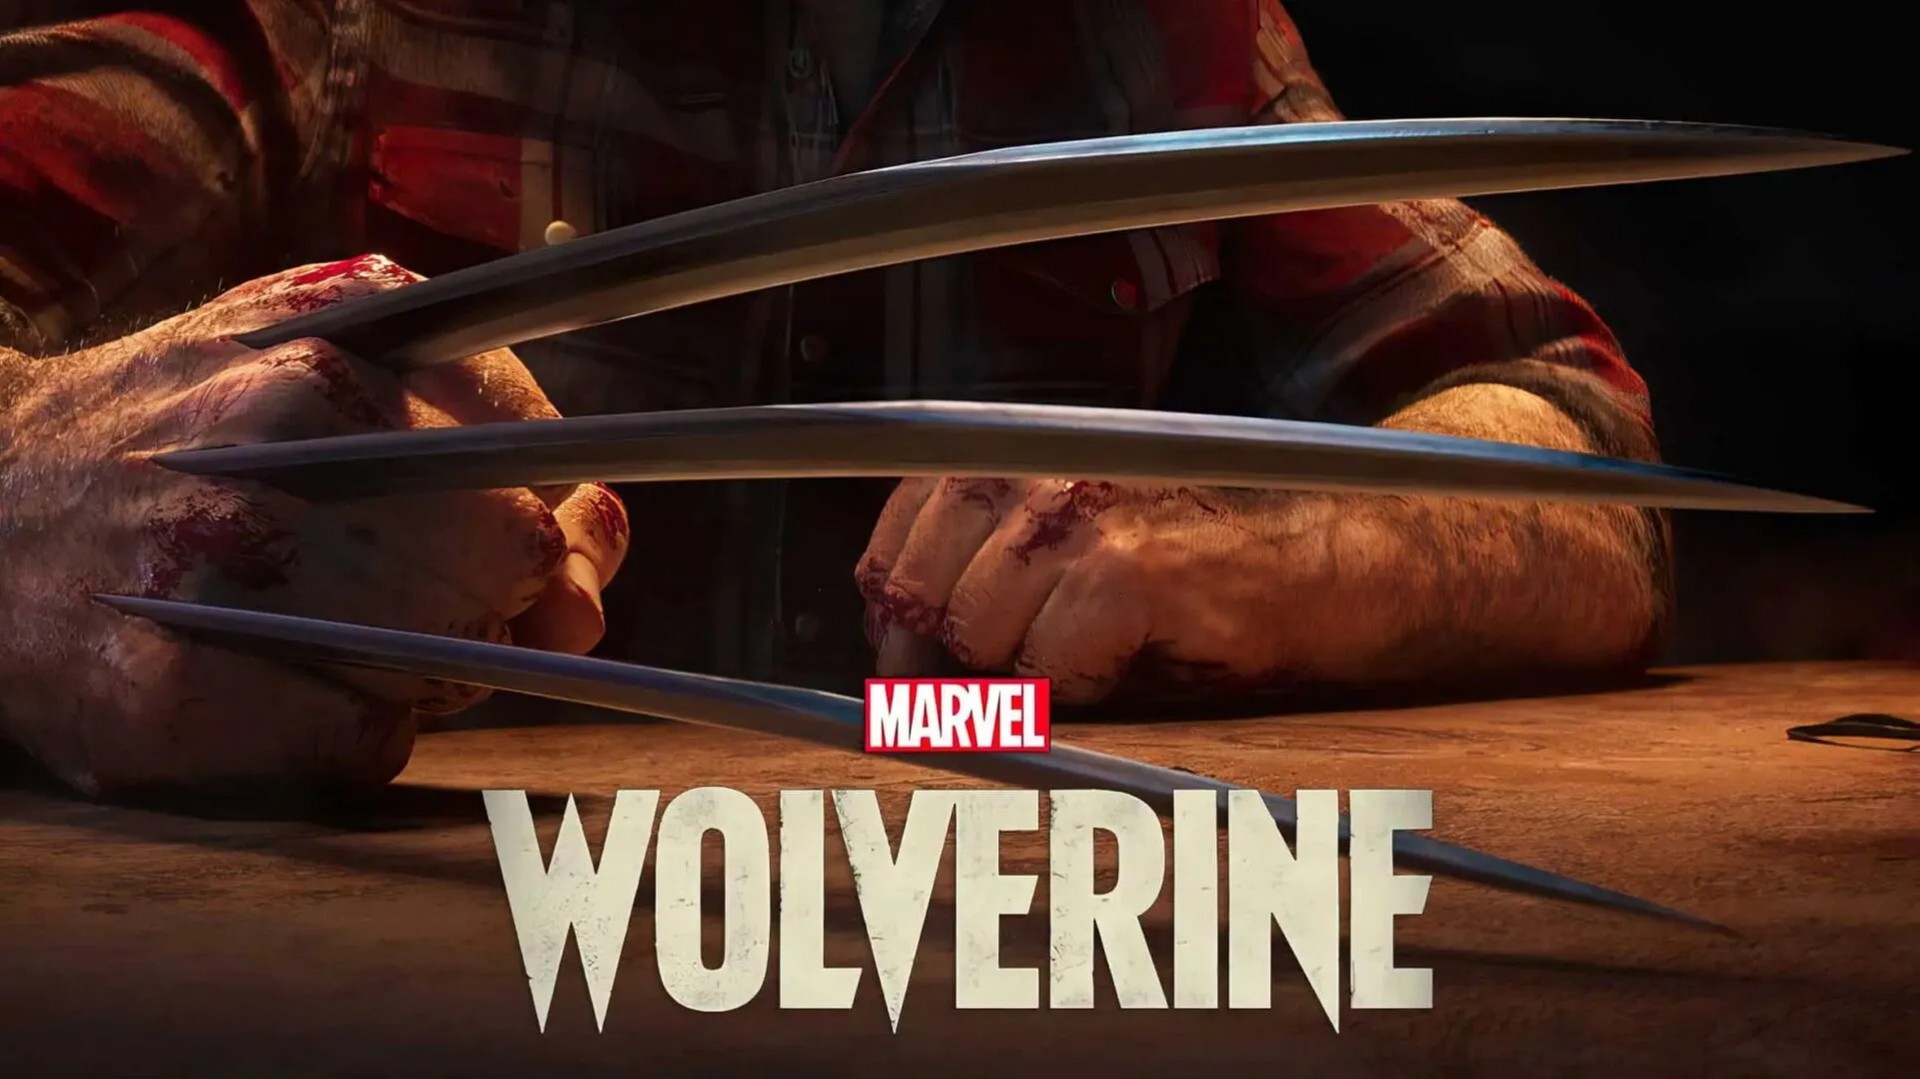 Marvel's Spider-Man 2 e Marvel's Wolverine revelados – PlayStation.Blog BR